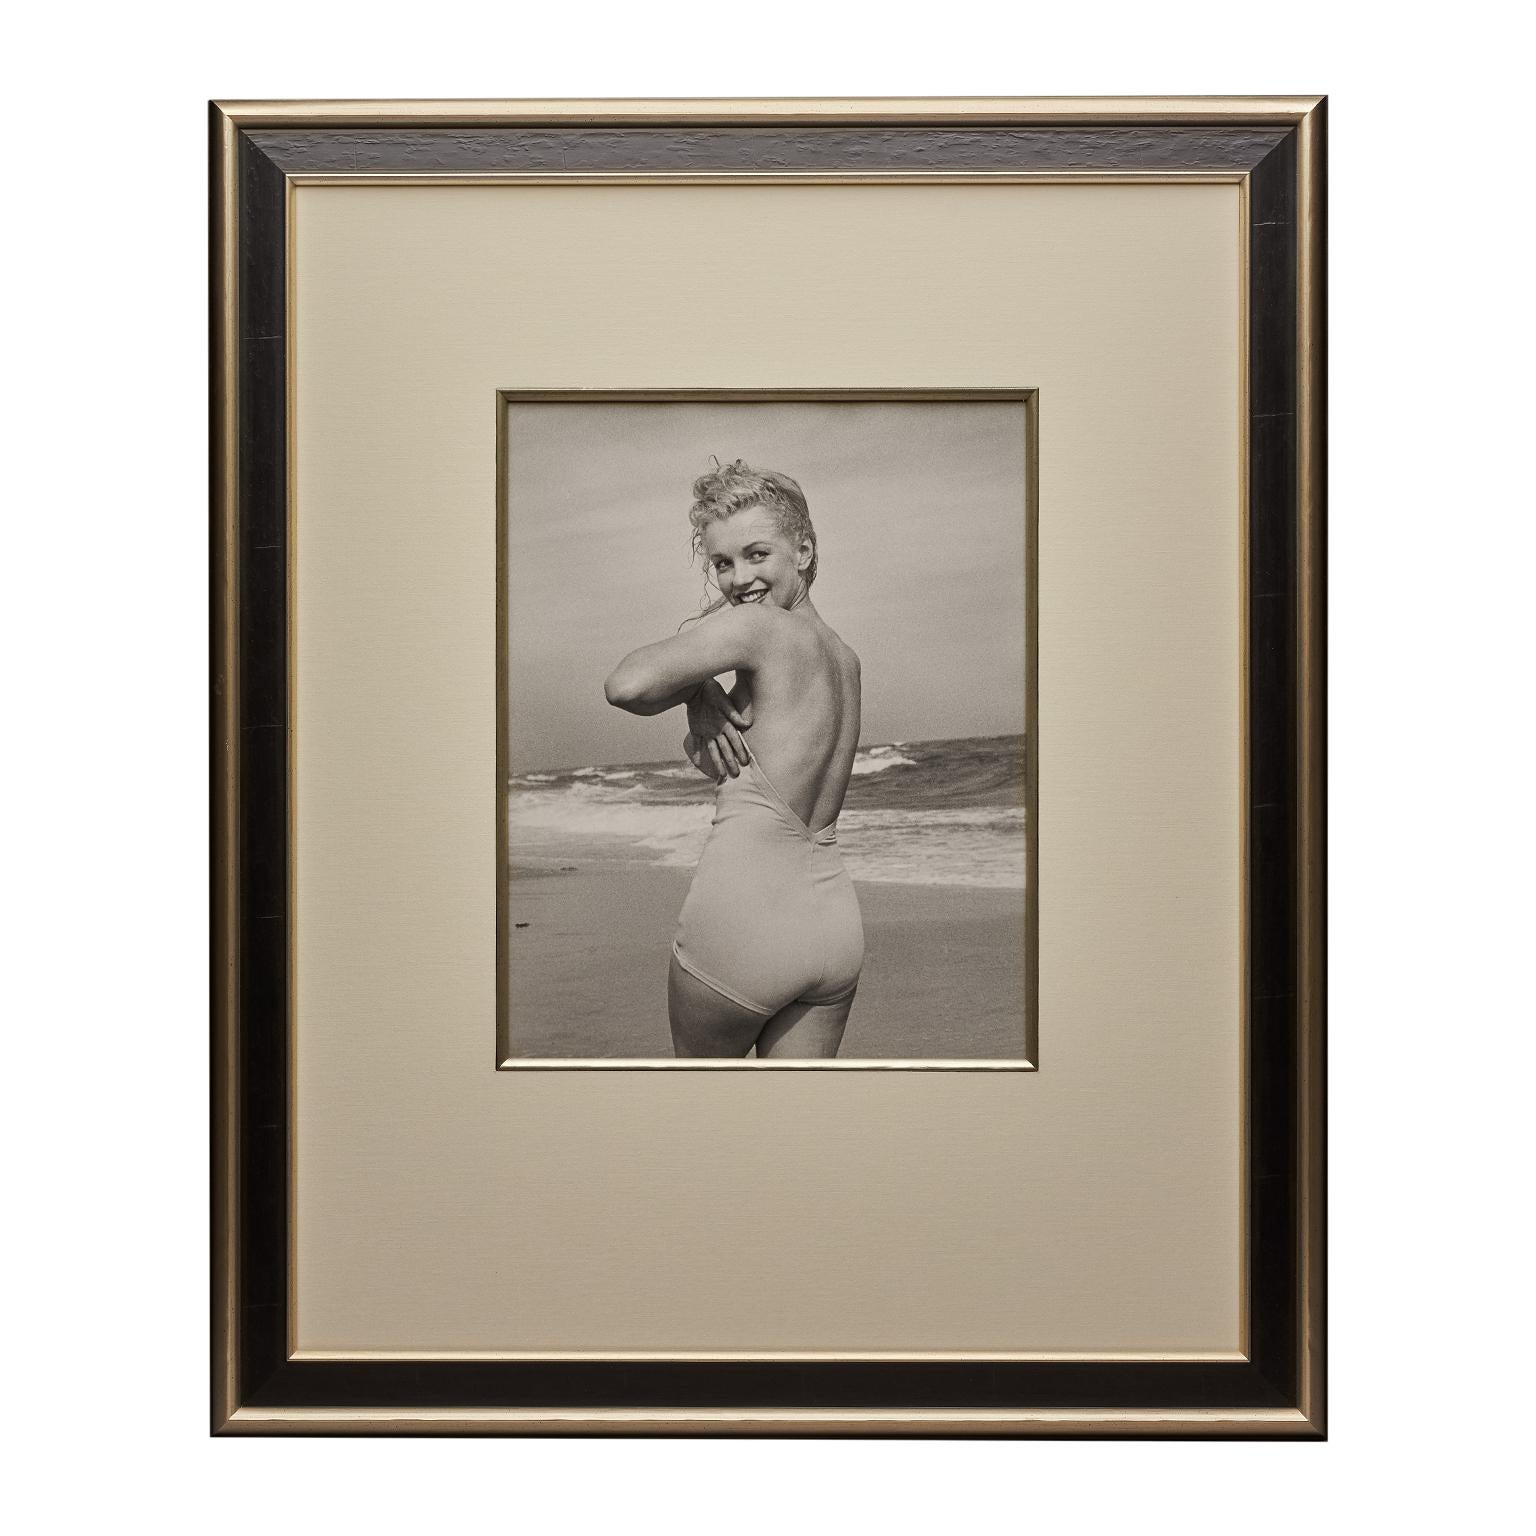 Marilyn Monroe by André de Dienes,  'Flirting on the Beach', Black and White - Print by Andre de Dienes